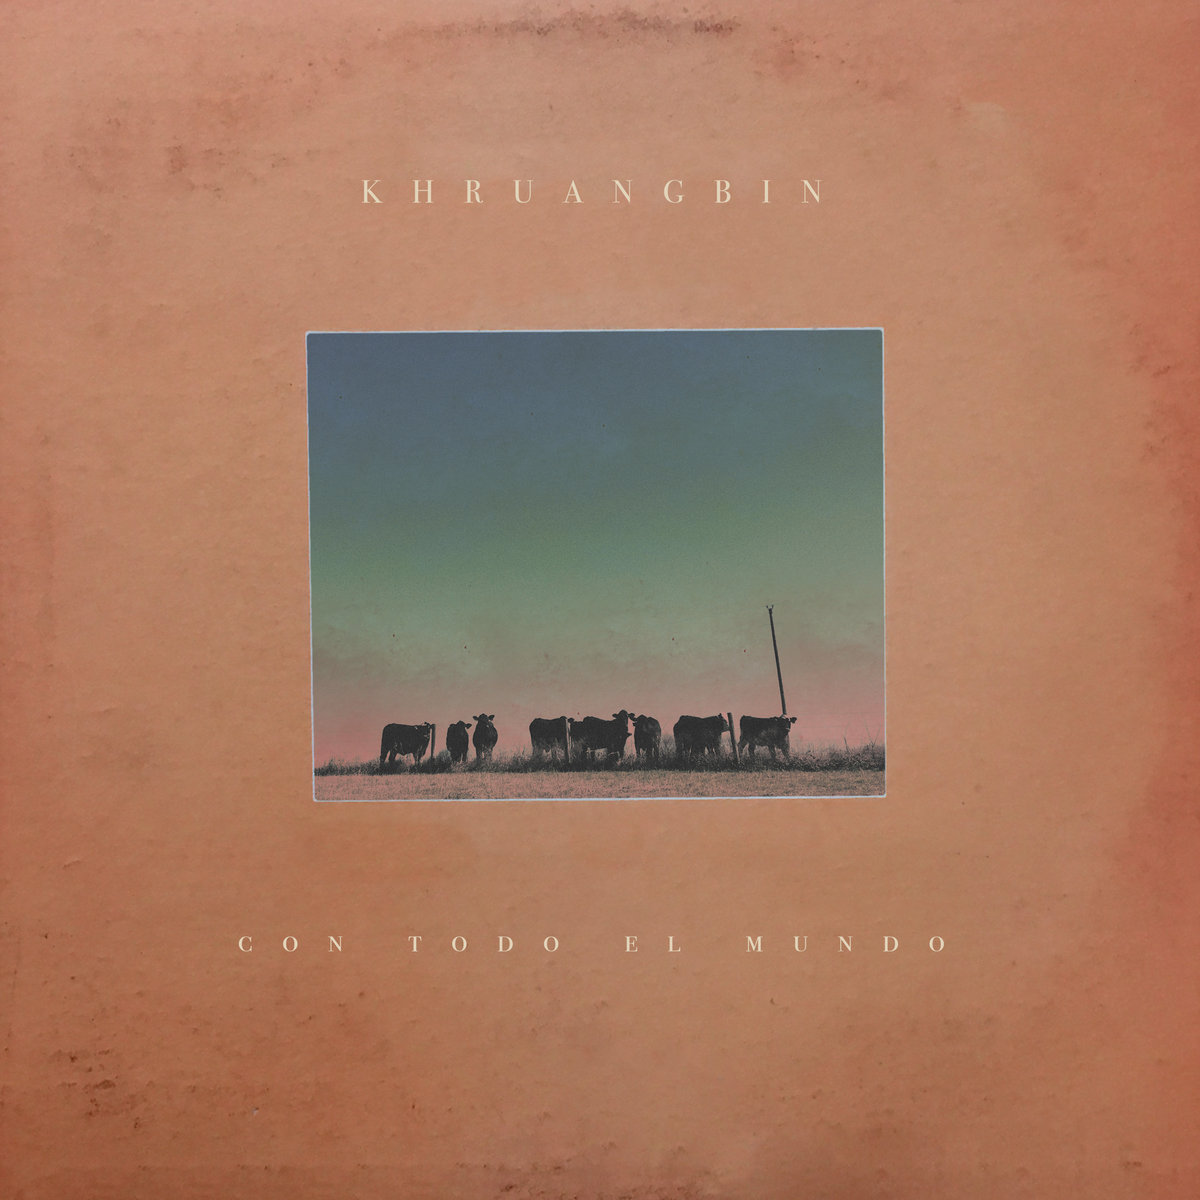 Khruangbin "Con todo el mundo" LP